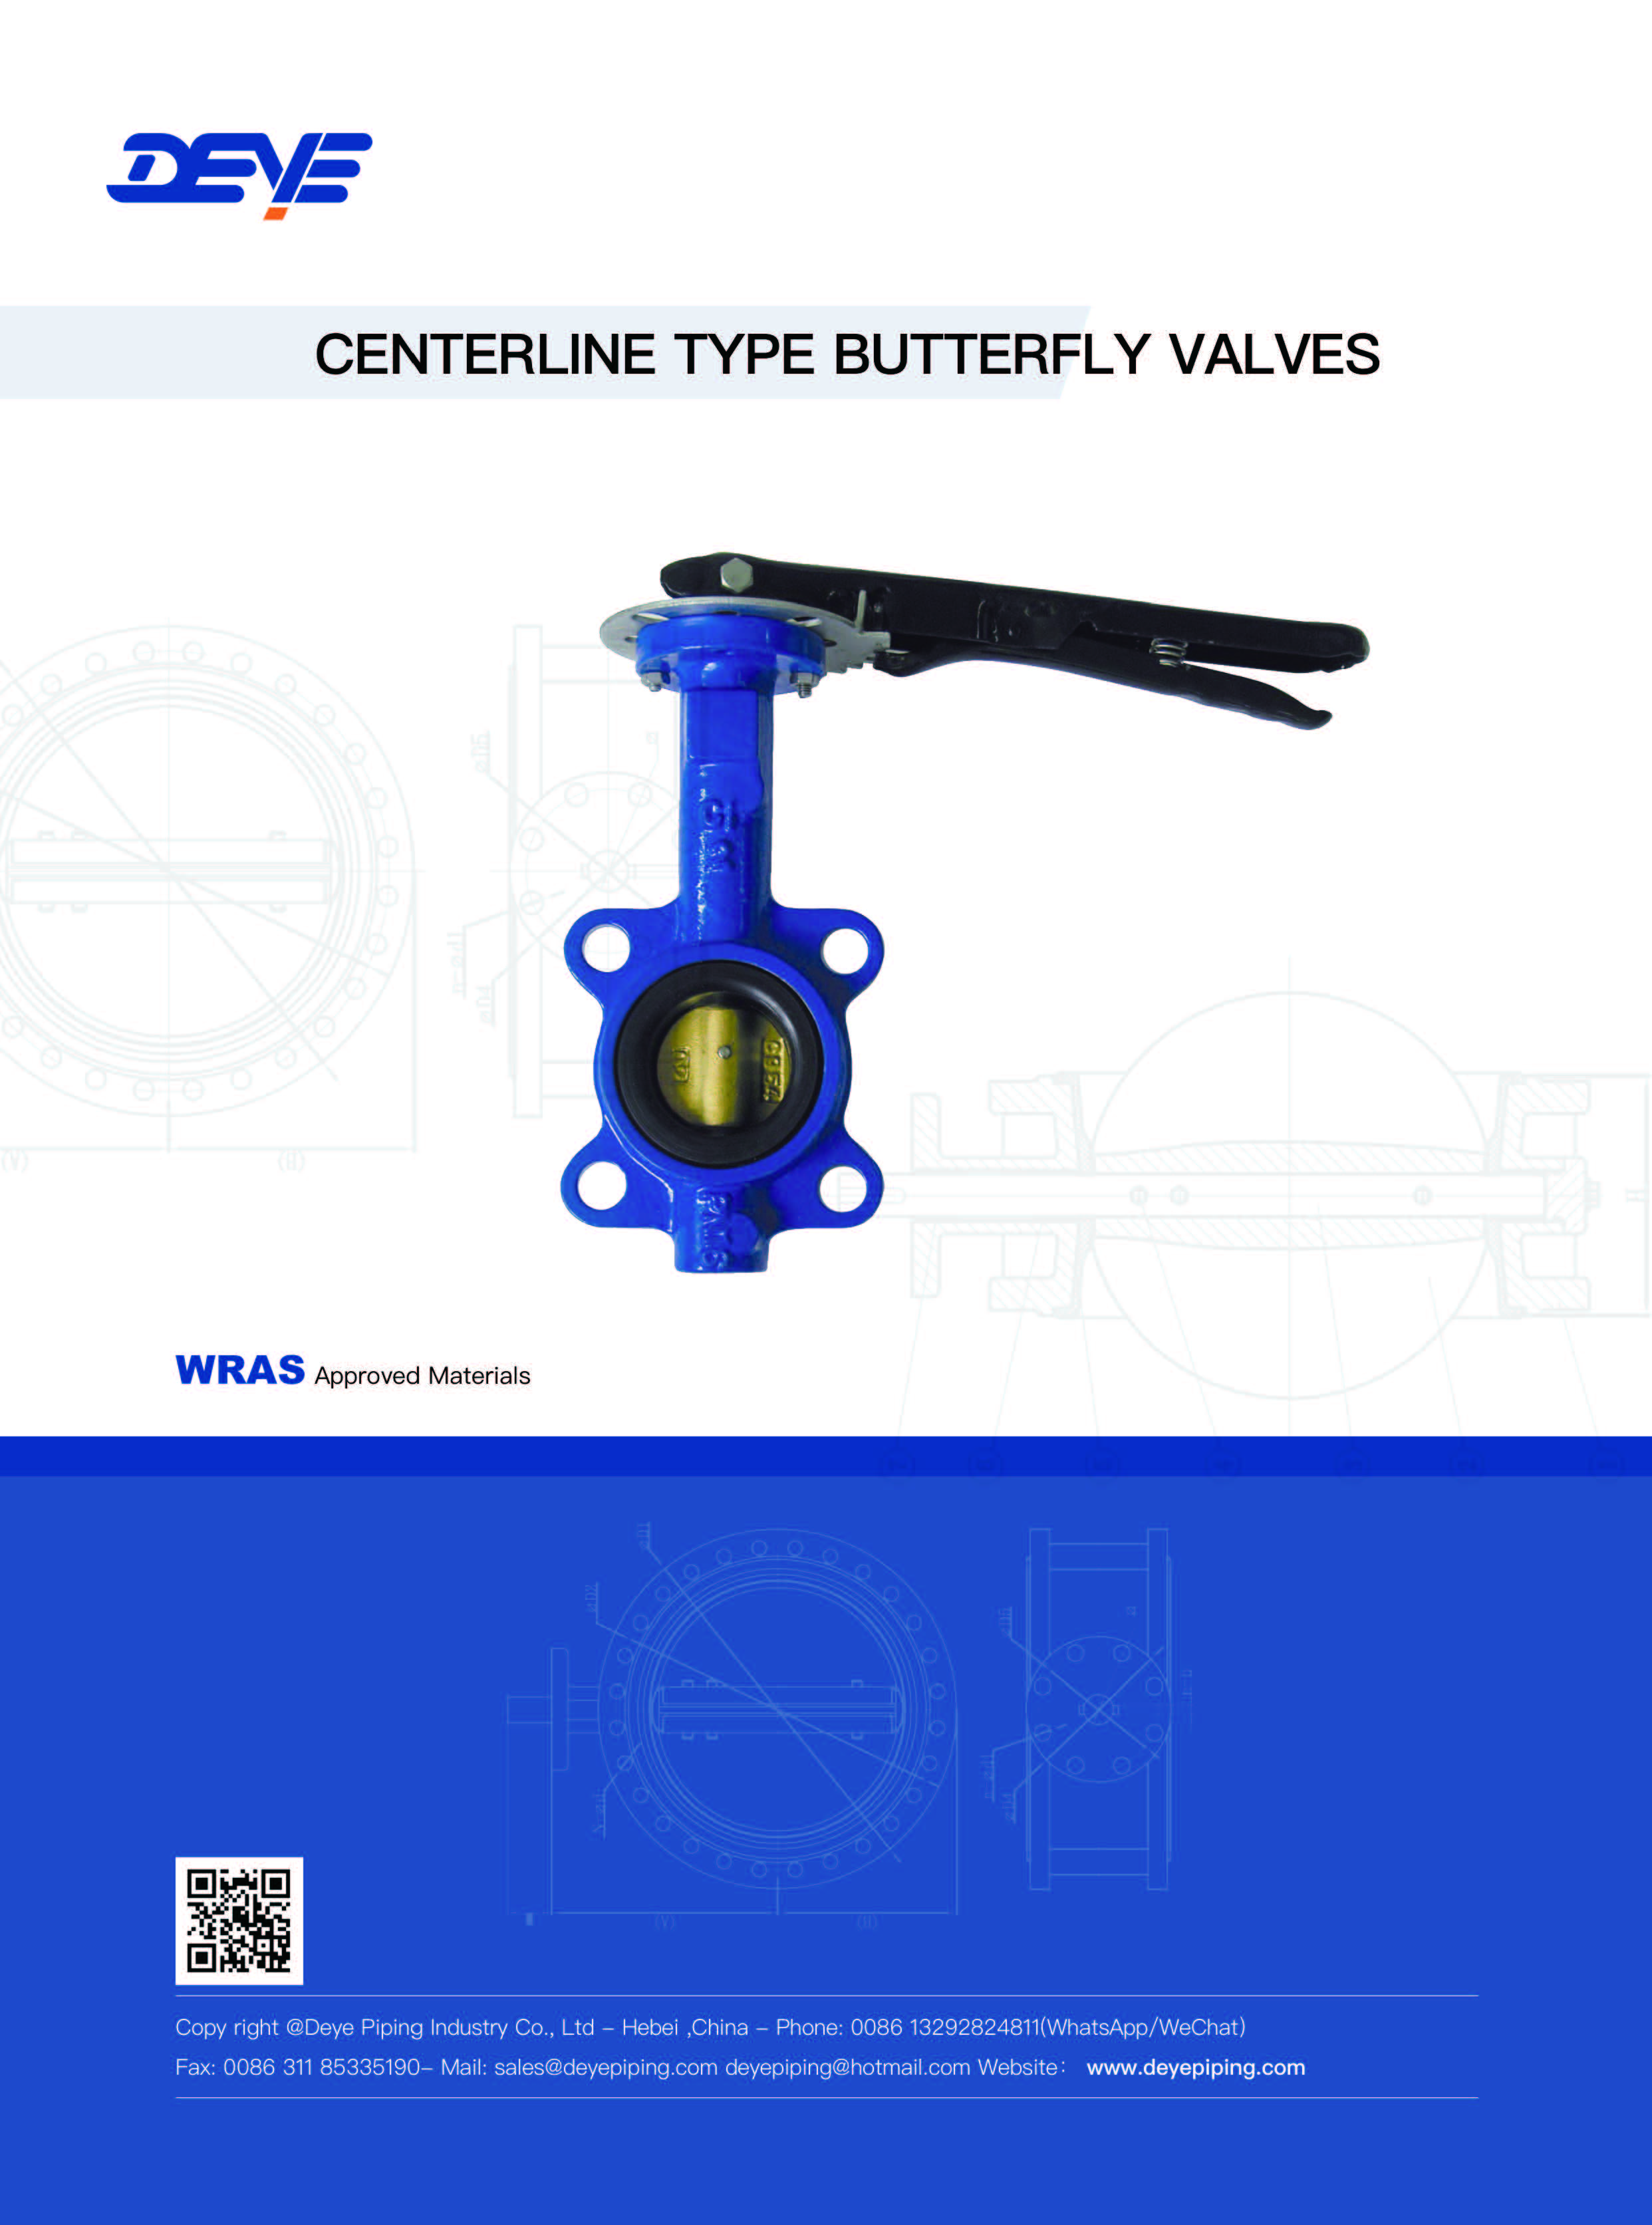 Catalogue of Centerline Type Butterfly Valve